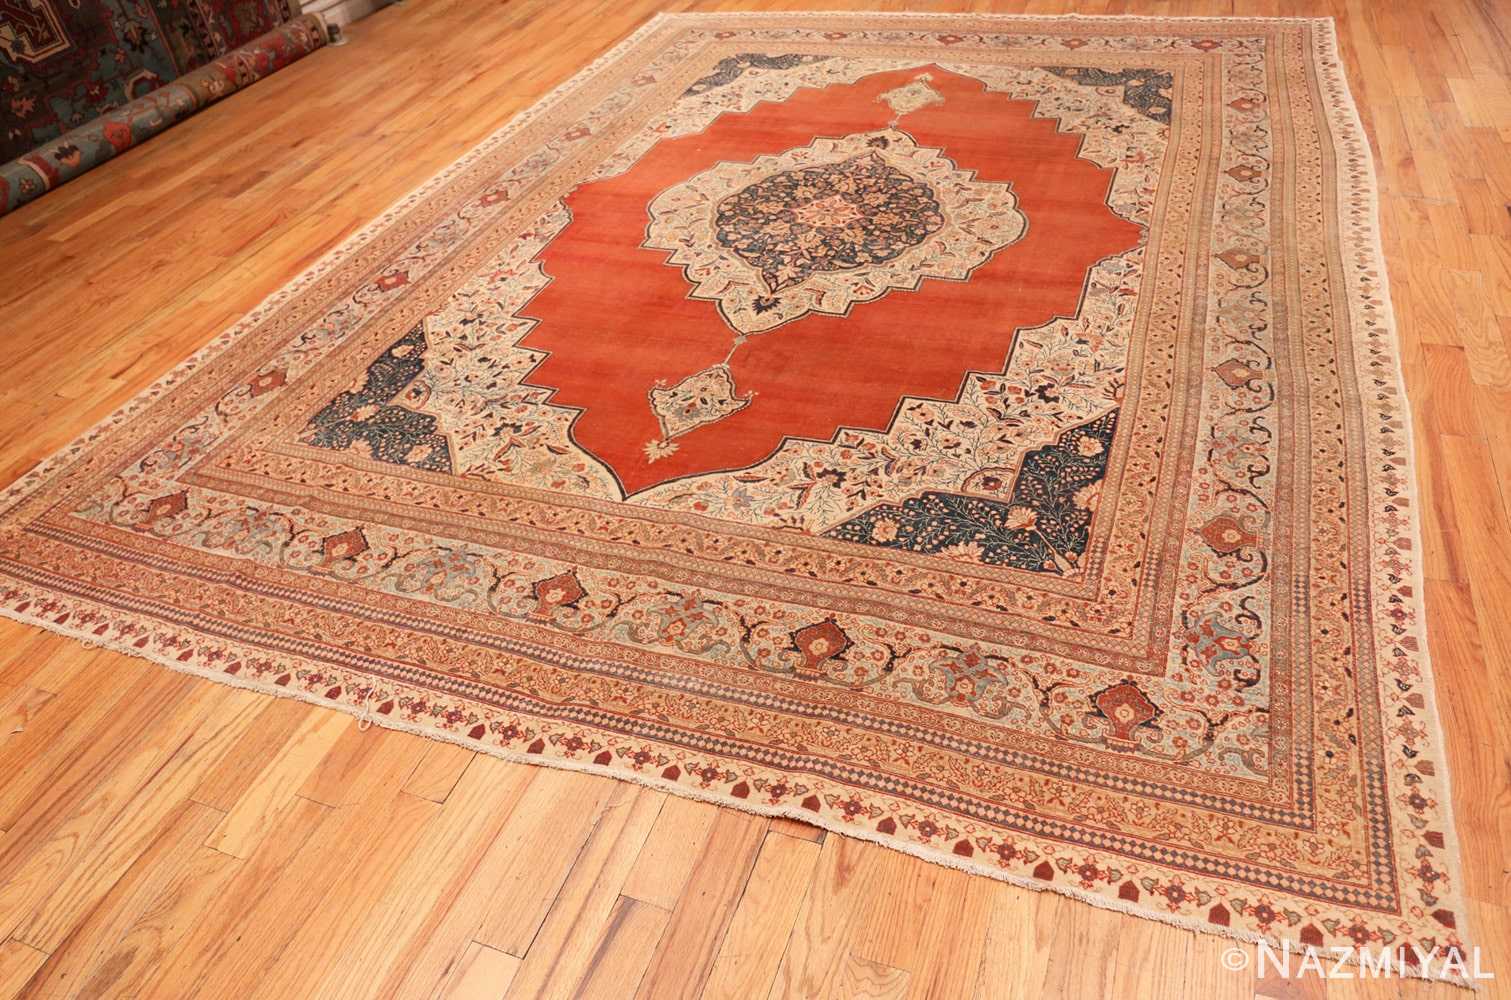 Full Antique Persian Tabriz rug 45765 by Nazmiyal